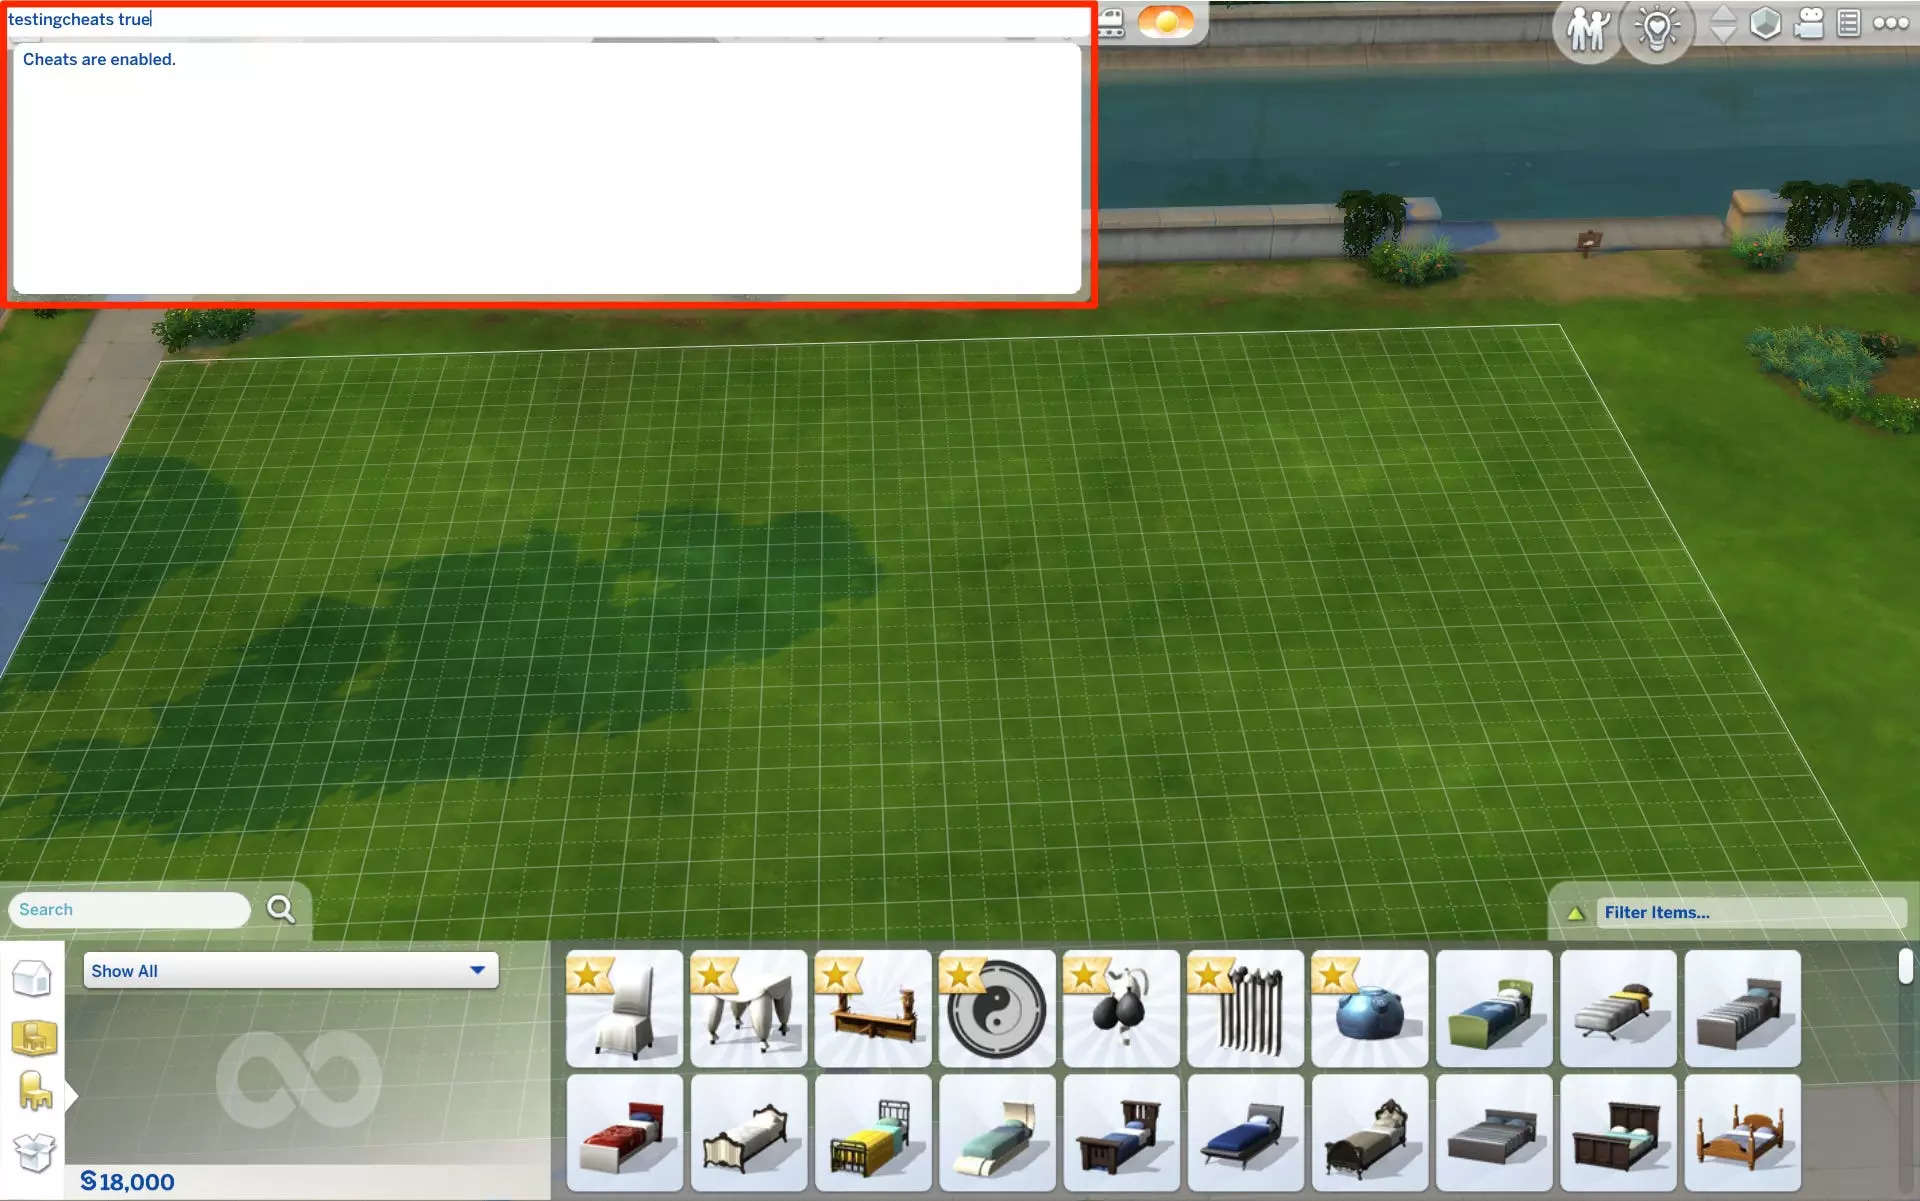 The Sims 4 Hidden Objects Cheats 